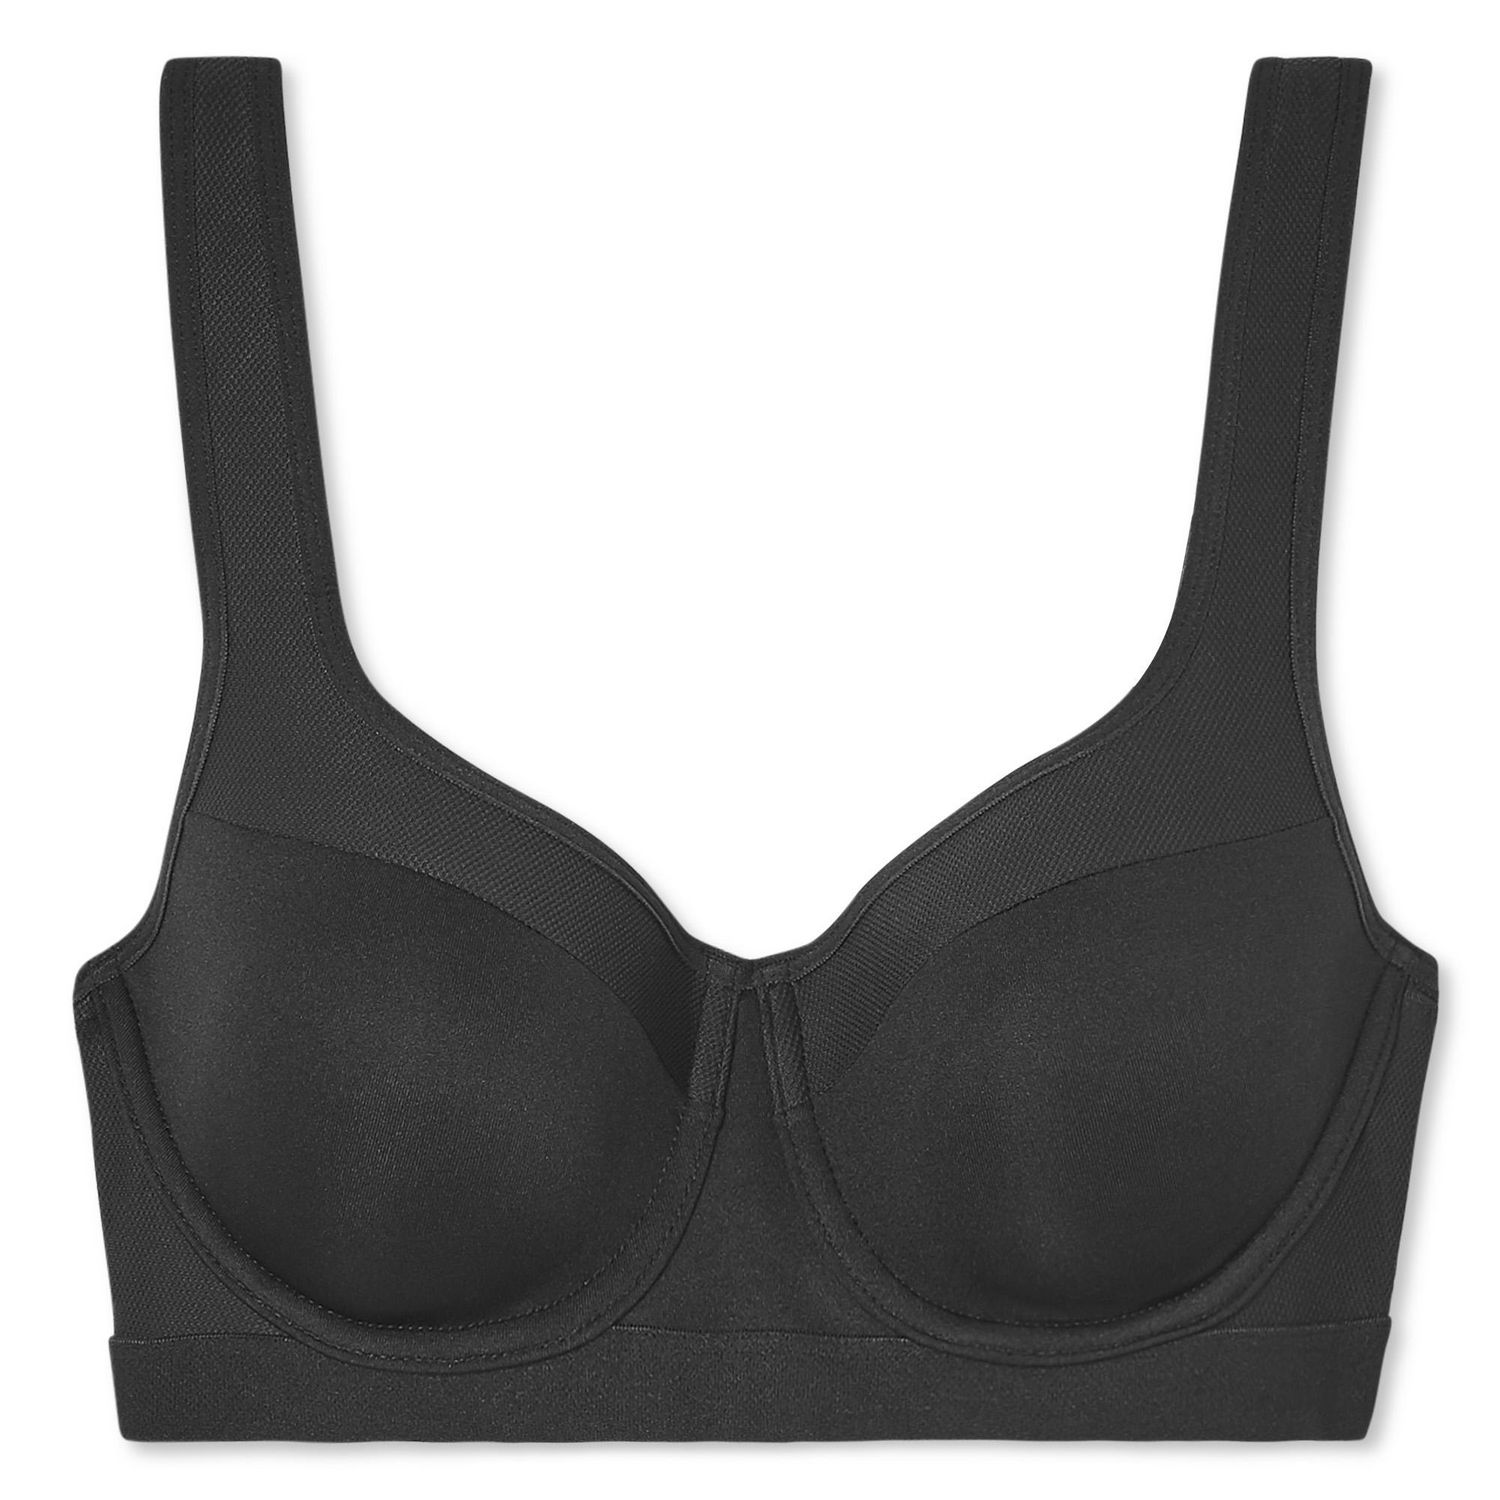 MTA Sport women's 2X athletic sports bra Size undefined - $9